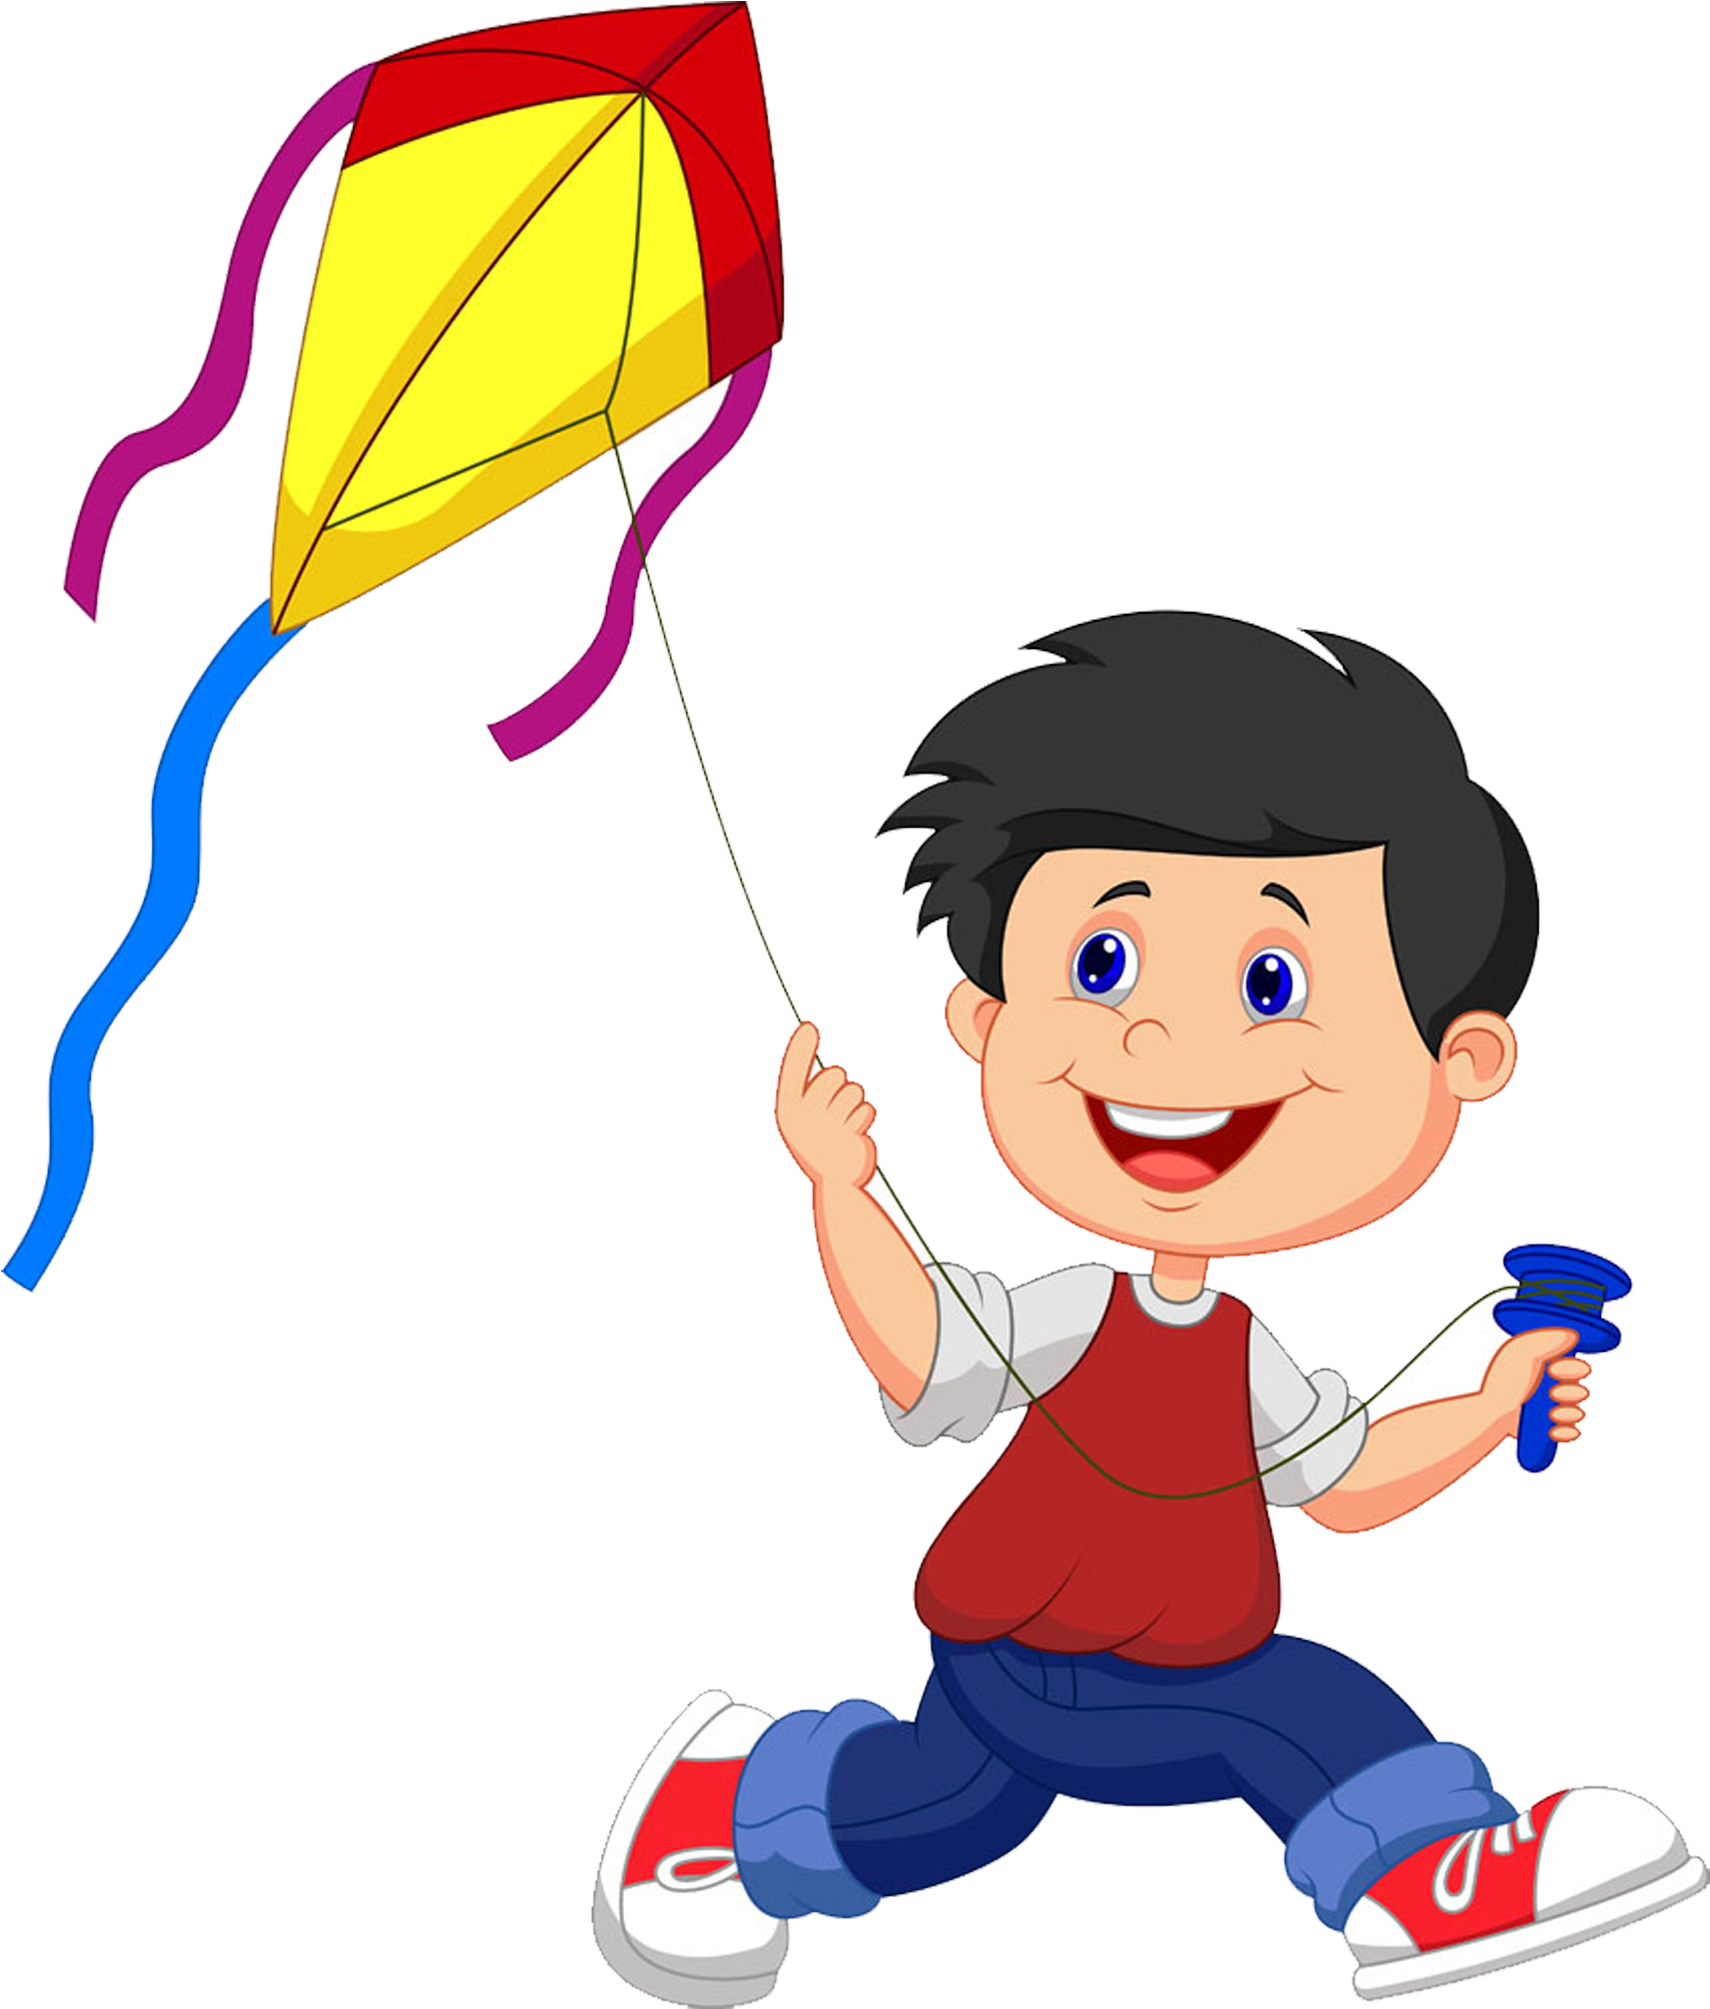 Kite Cartoon Illustration - Playing Kite Cartoon (2336x2204)